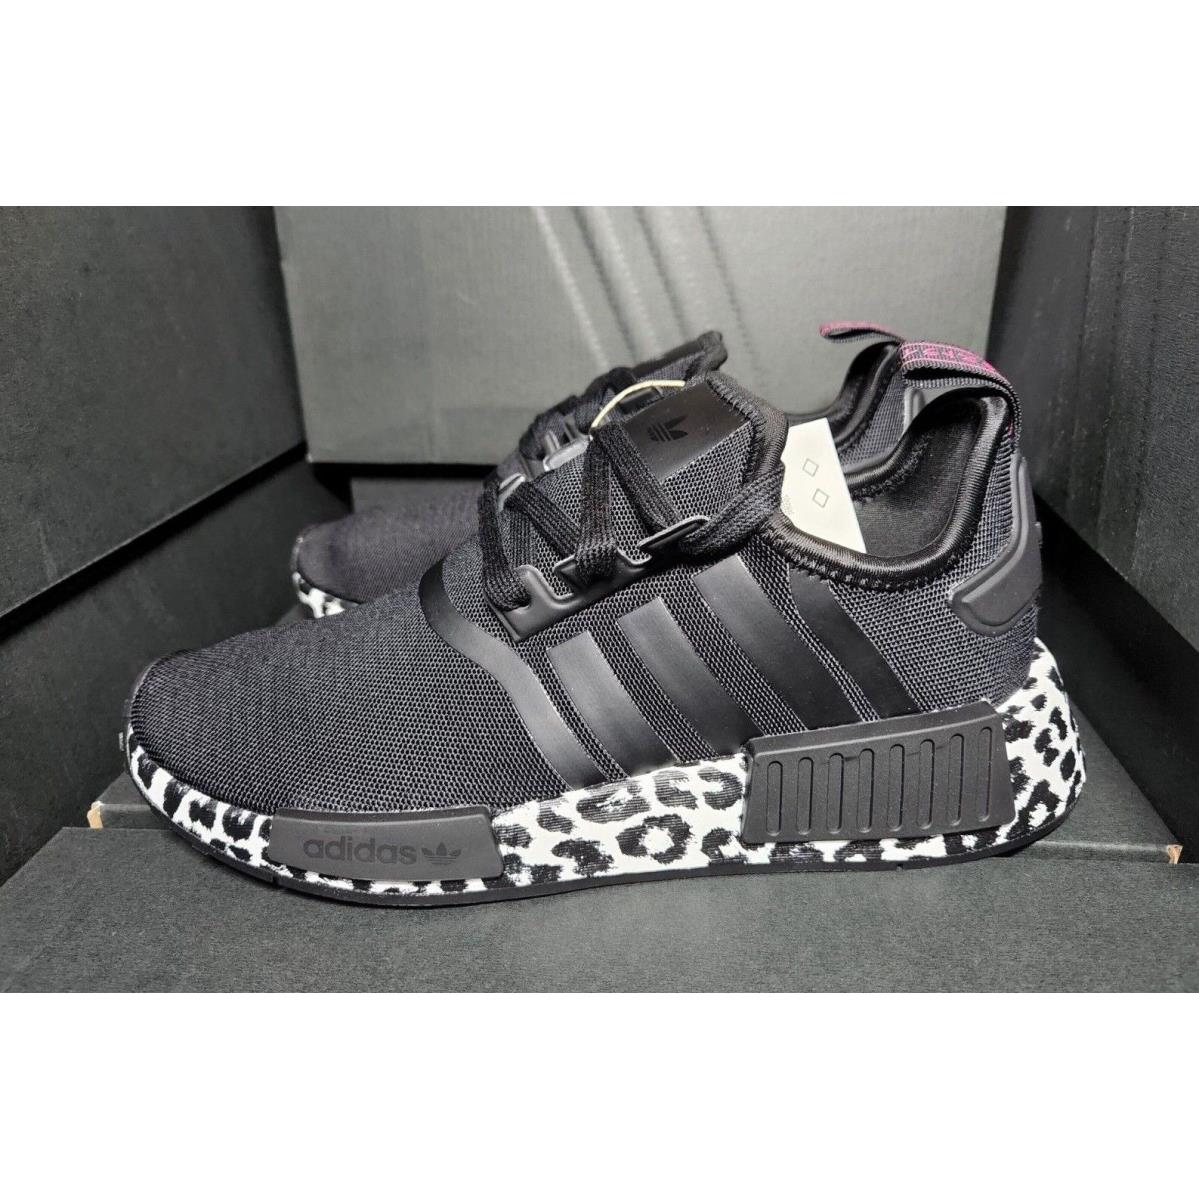 Adidas Nmd R1 Boost Leopard Print Black White Pink Women`s Shoes GZ1622 Cheetah